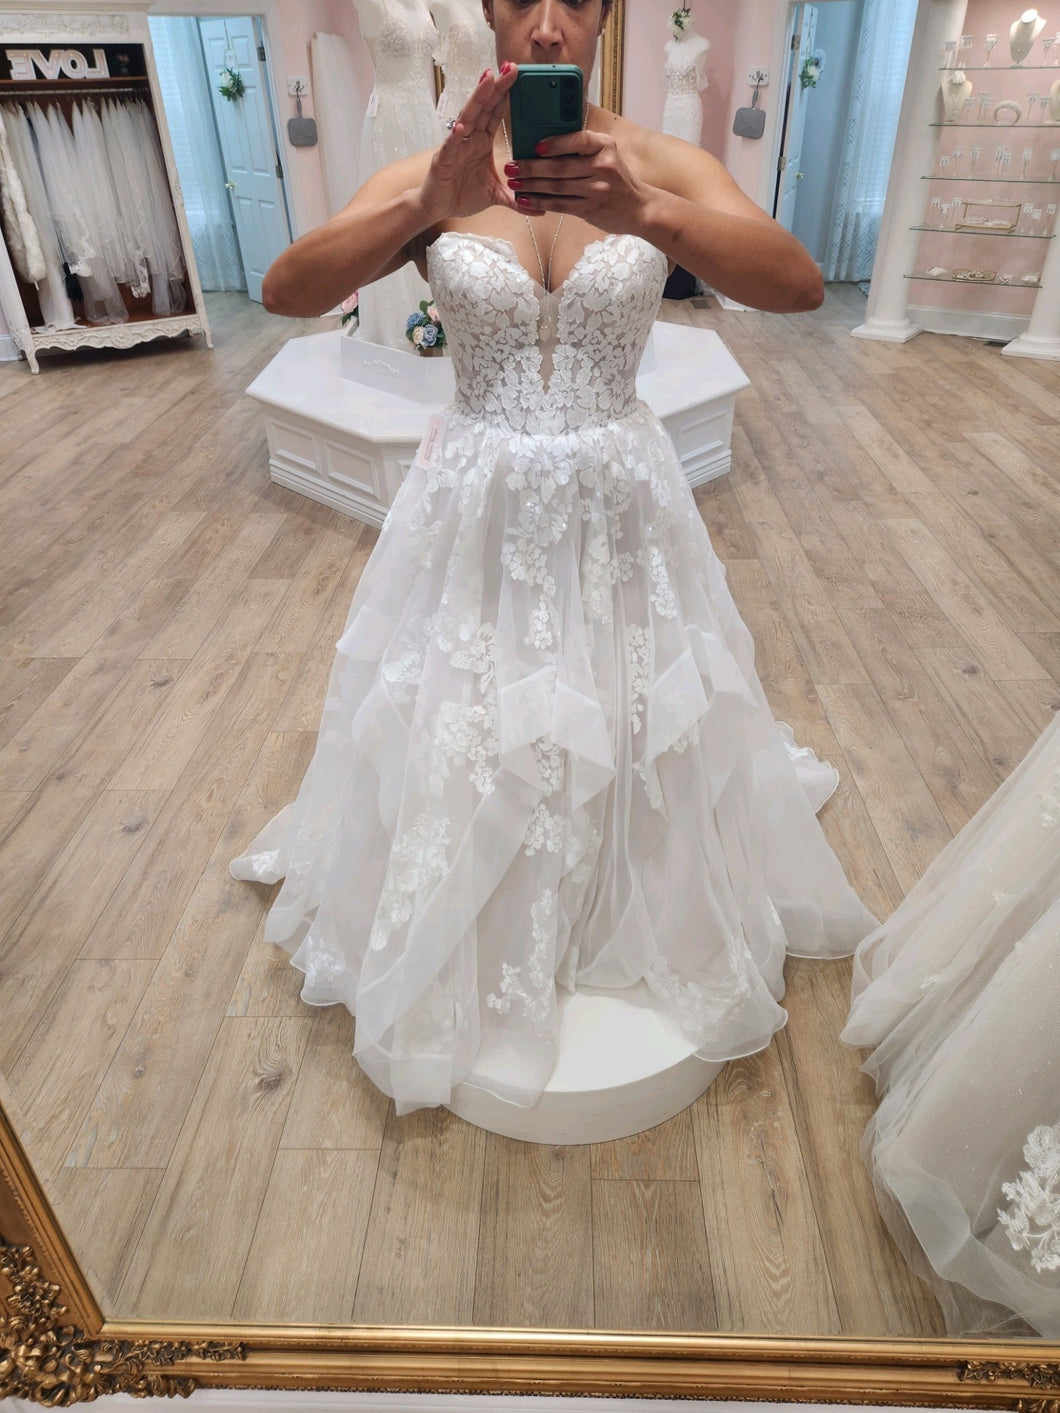 Kitty Chen 'H2139' wedding dress size-12 NEW